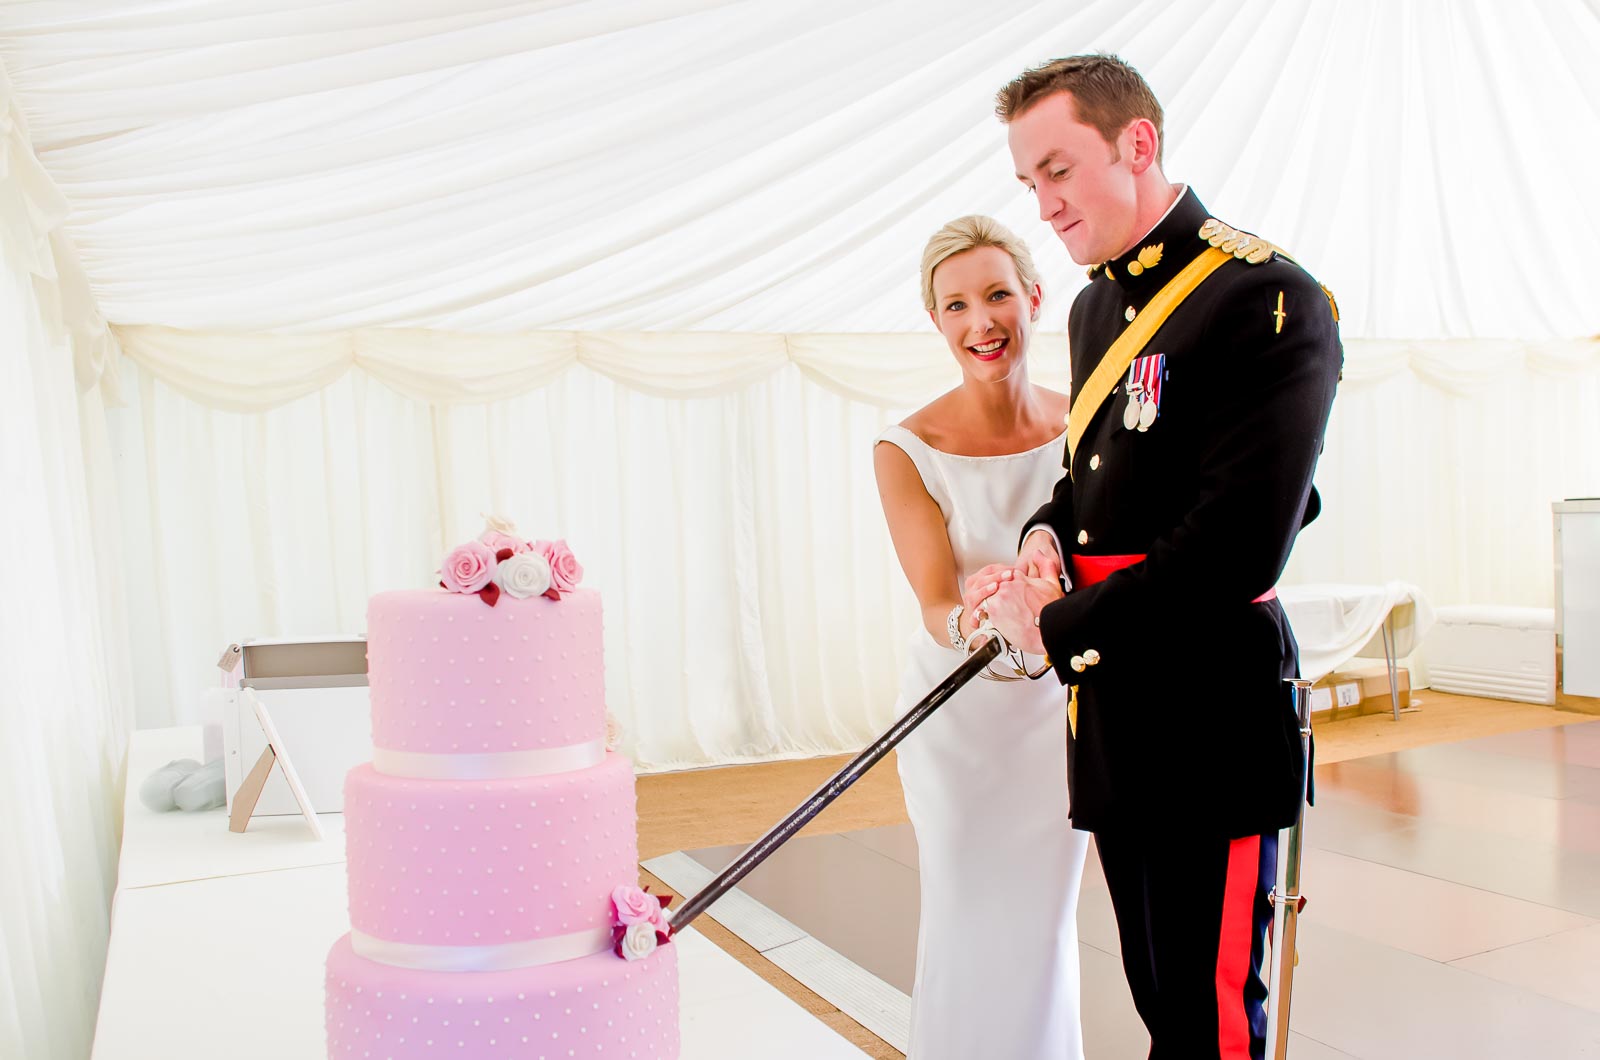 Rachael and Dan cut their wedding cake at their wedding reception wedding reception at Burpham Village Hall.